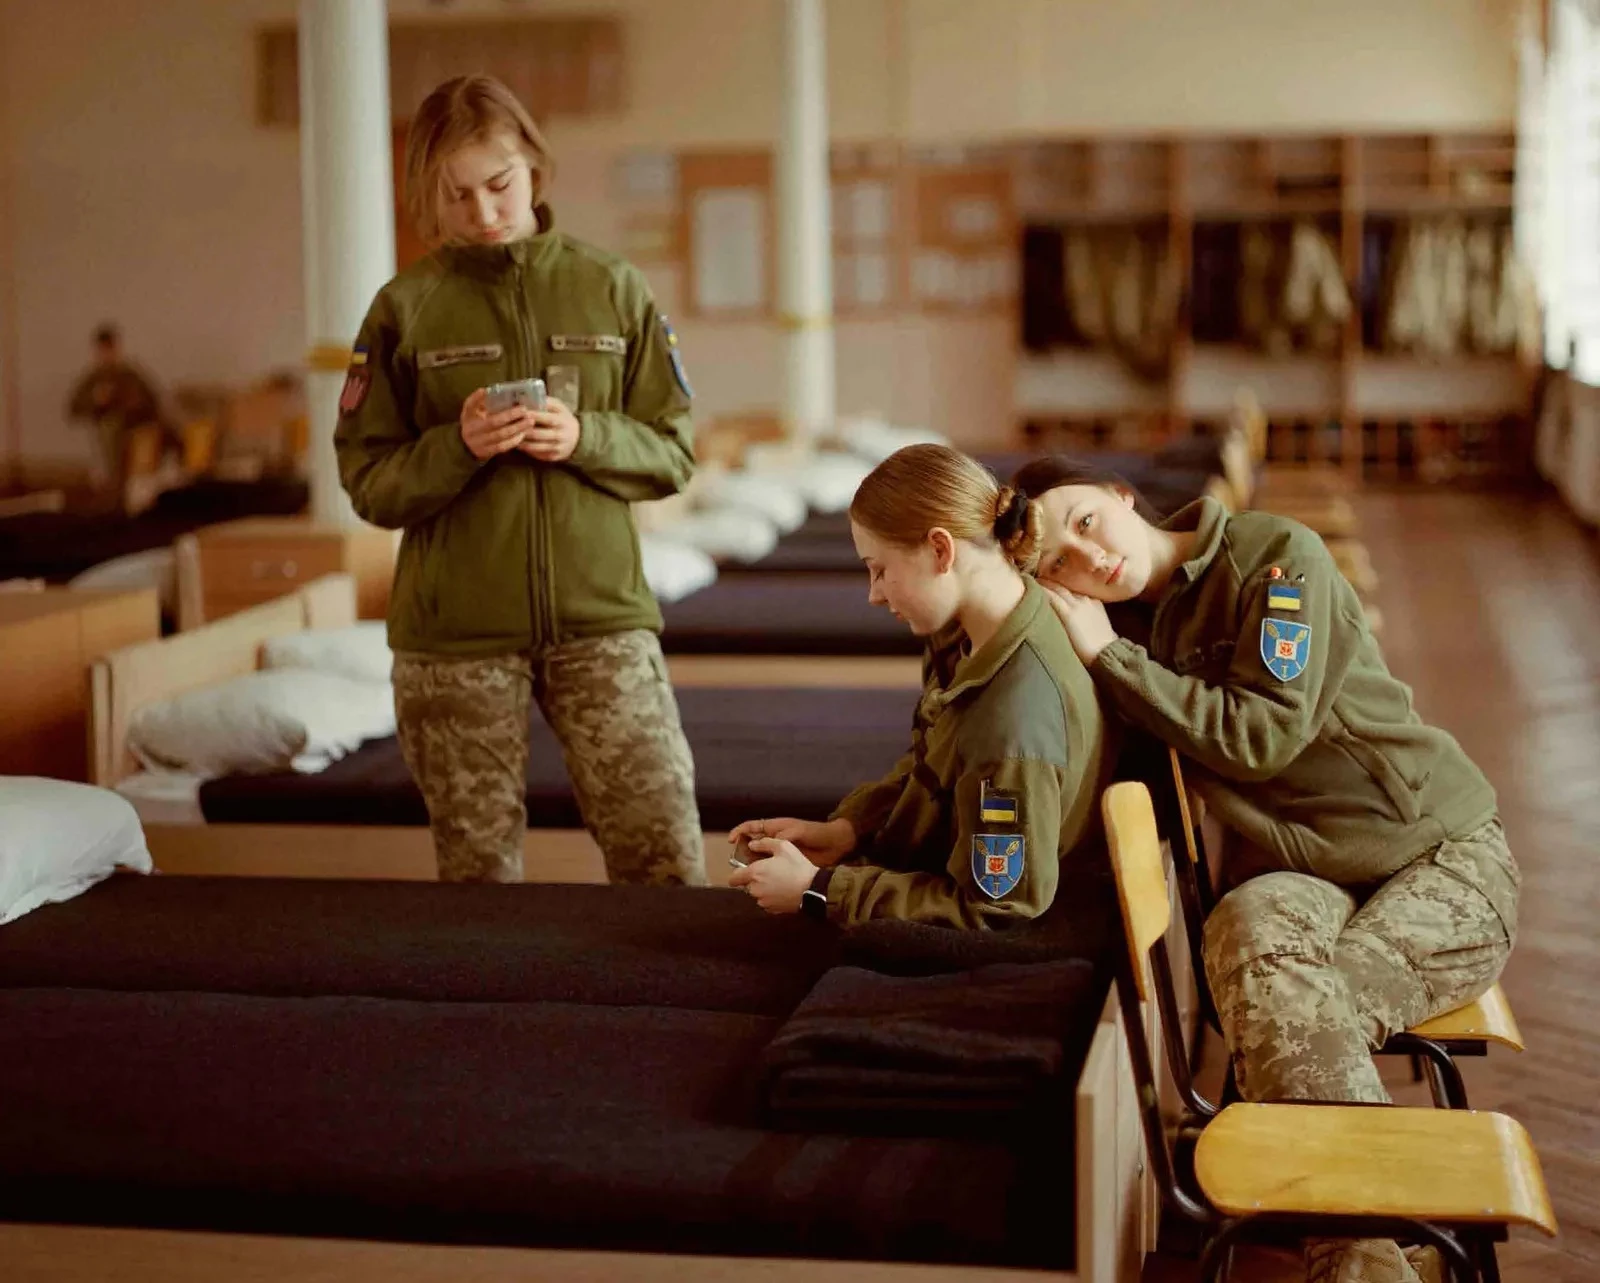 Cadets of the Ivan Bohun Military High School